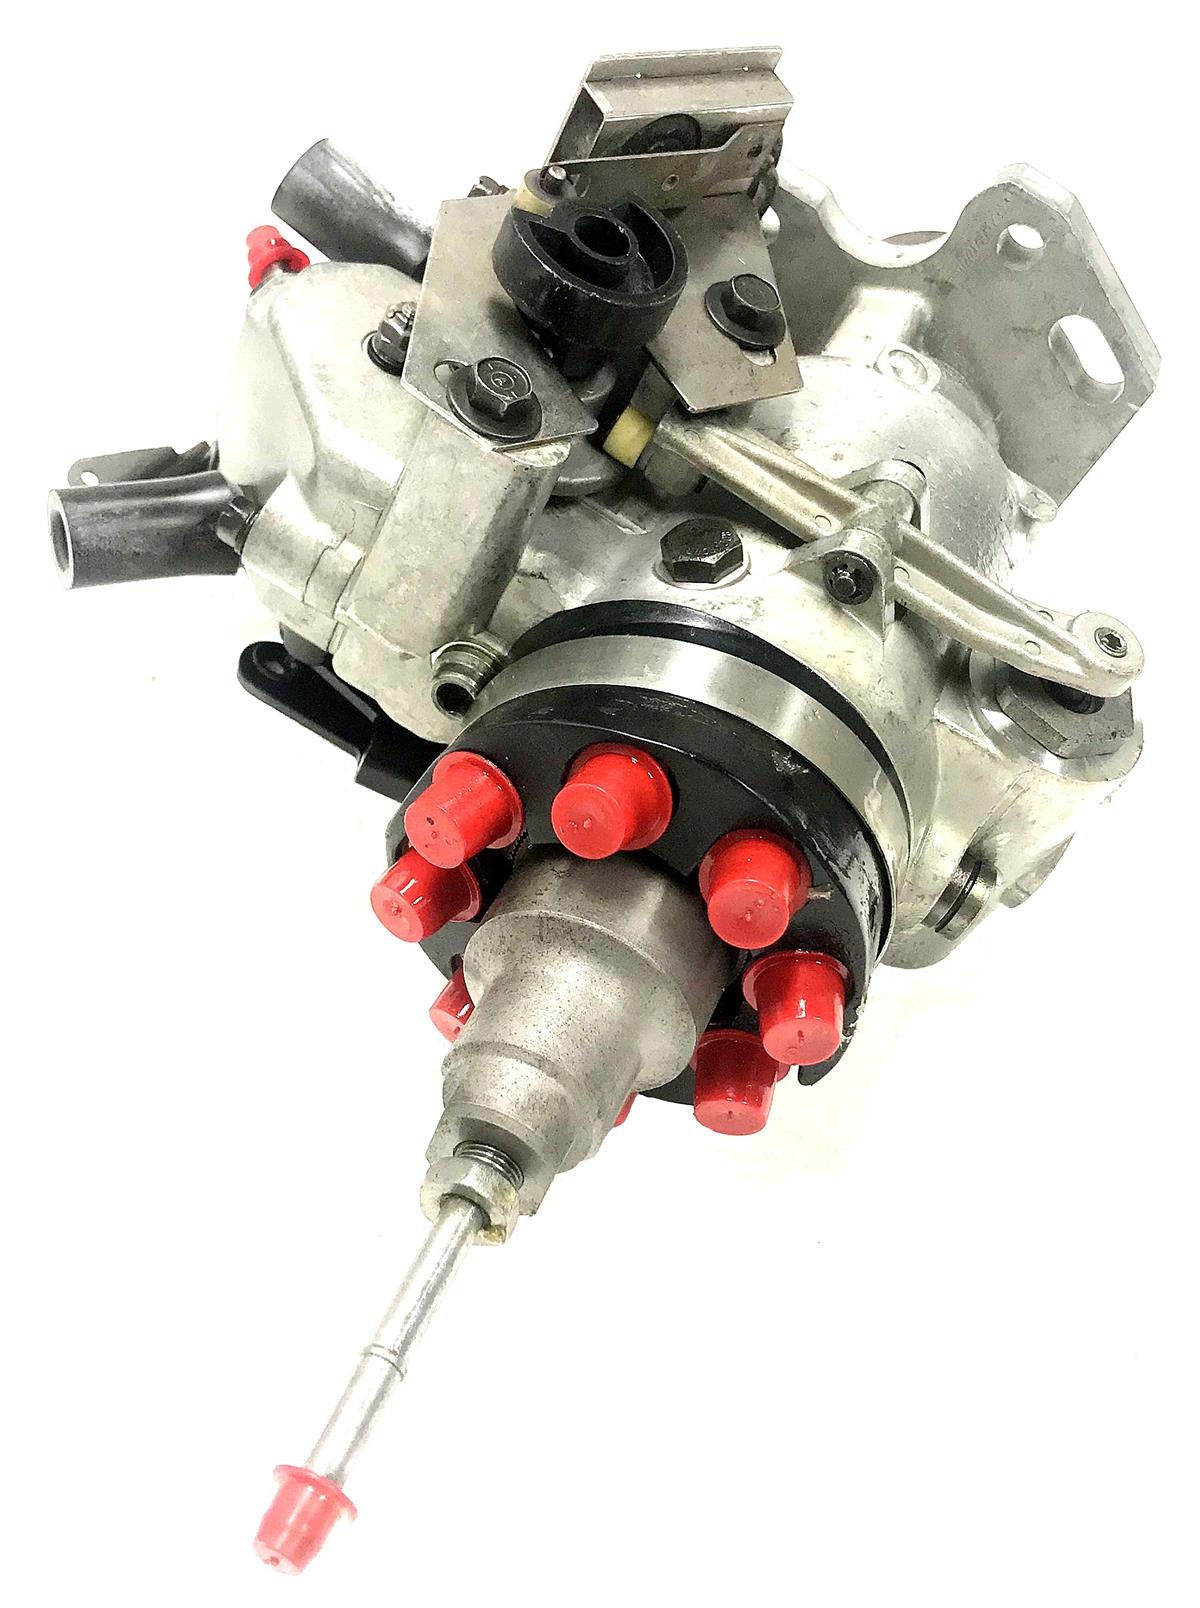 HM-1083 | HM-1083  6.5L Turbo Diesel Fuel Injection Pump With Throttle Position Sensor HMMWV (3).jpeg